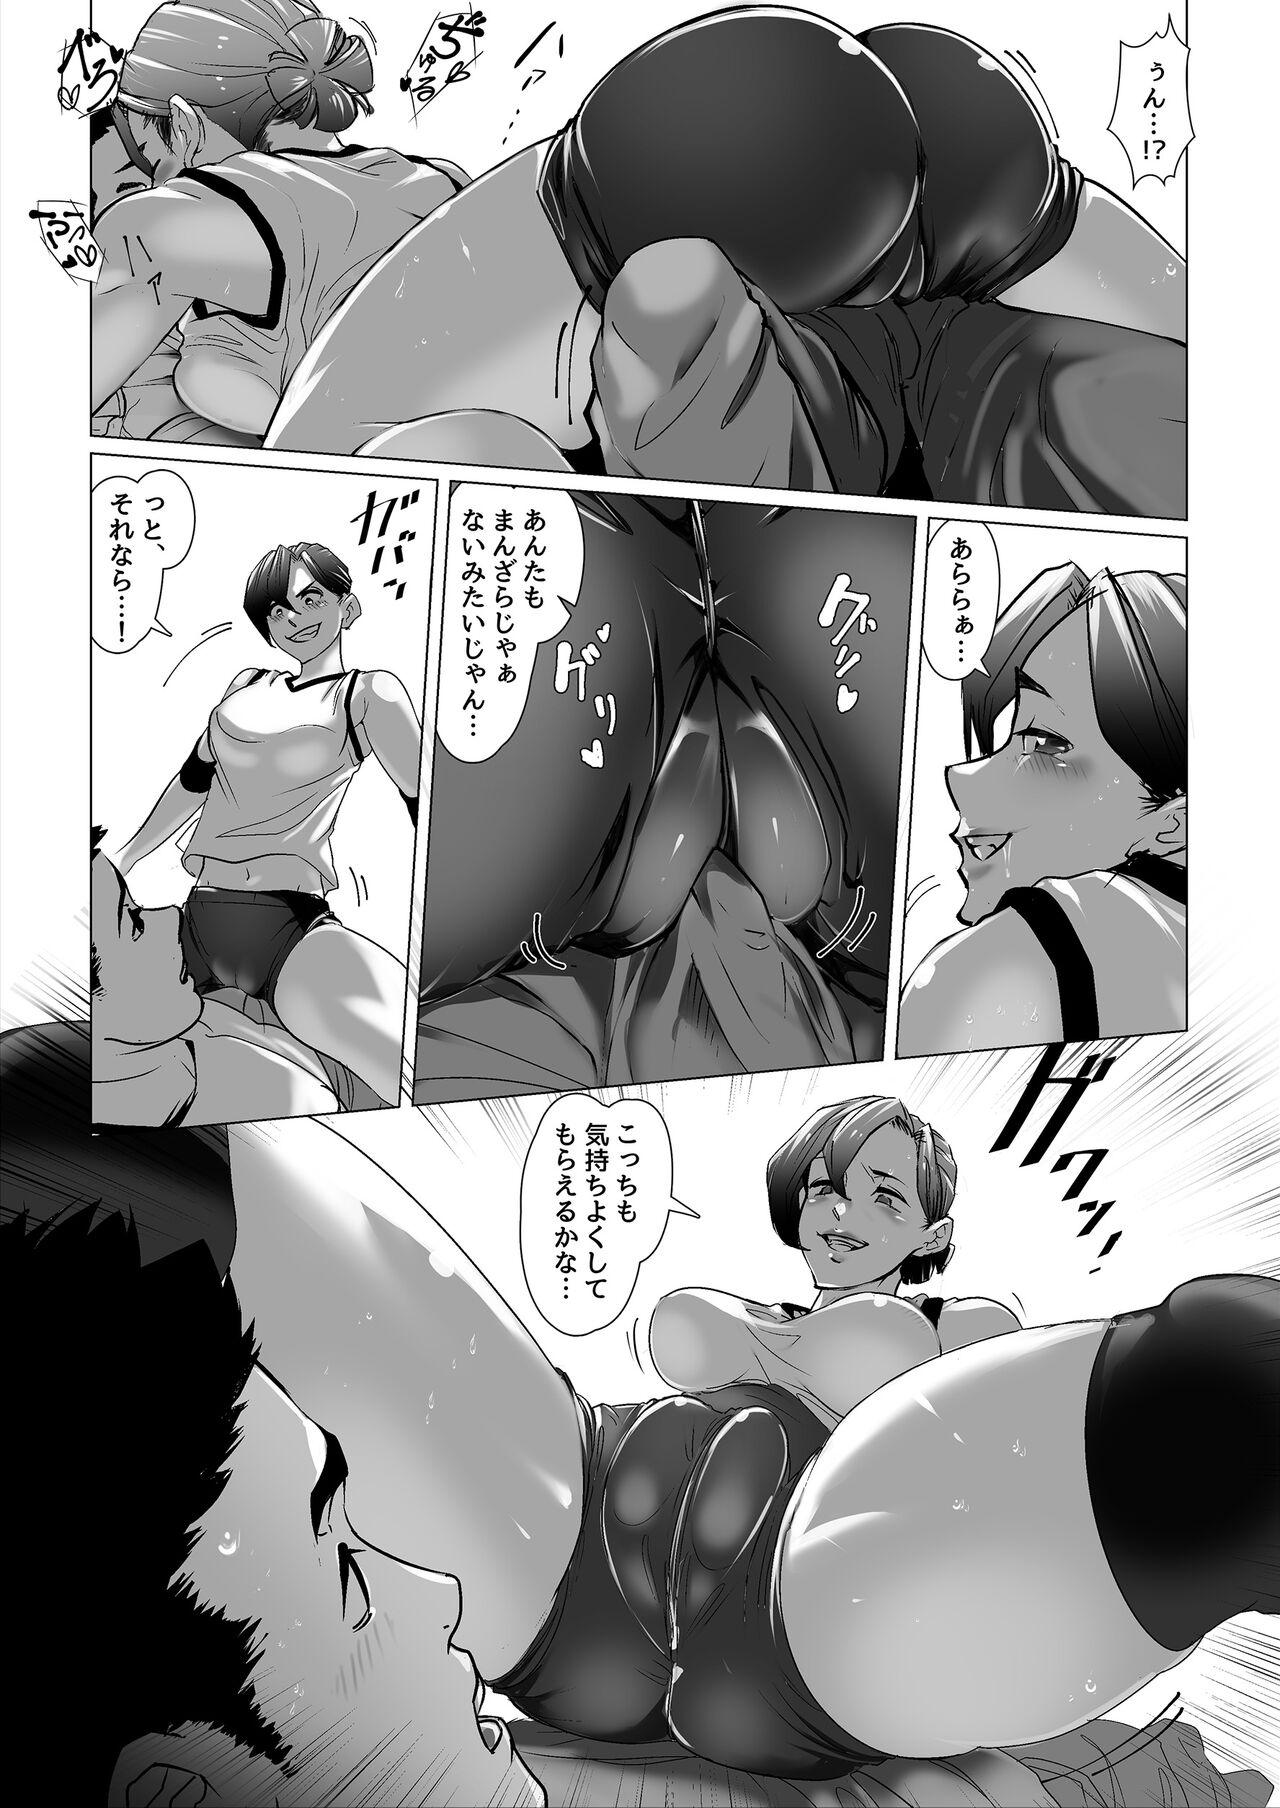 [Koda1ra] Lucky Happening - Women's Volleyball - Vol 3 6